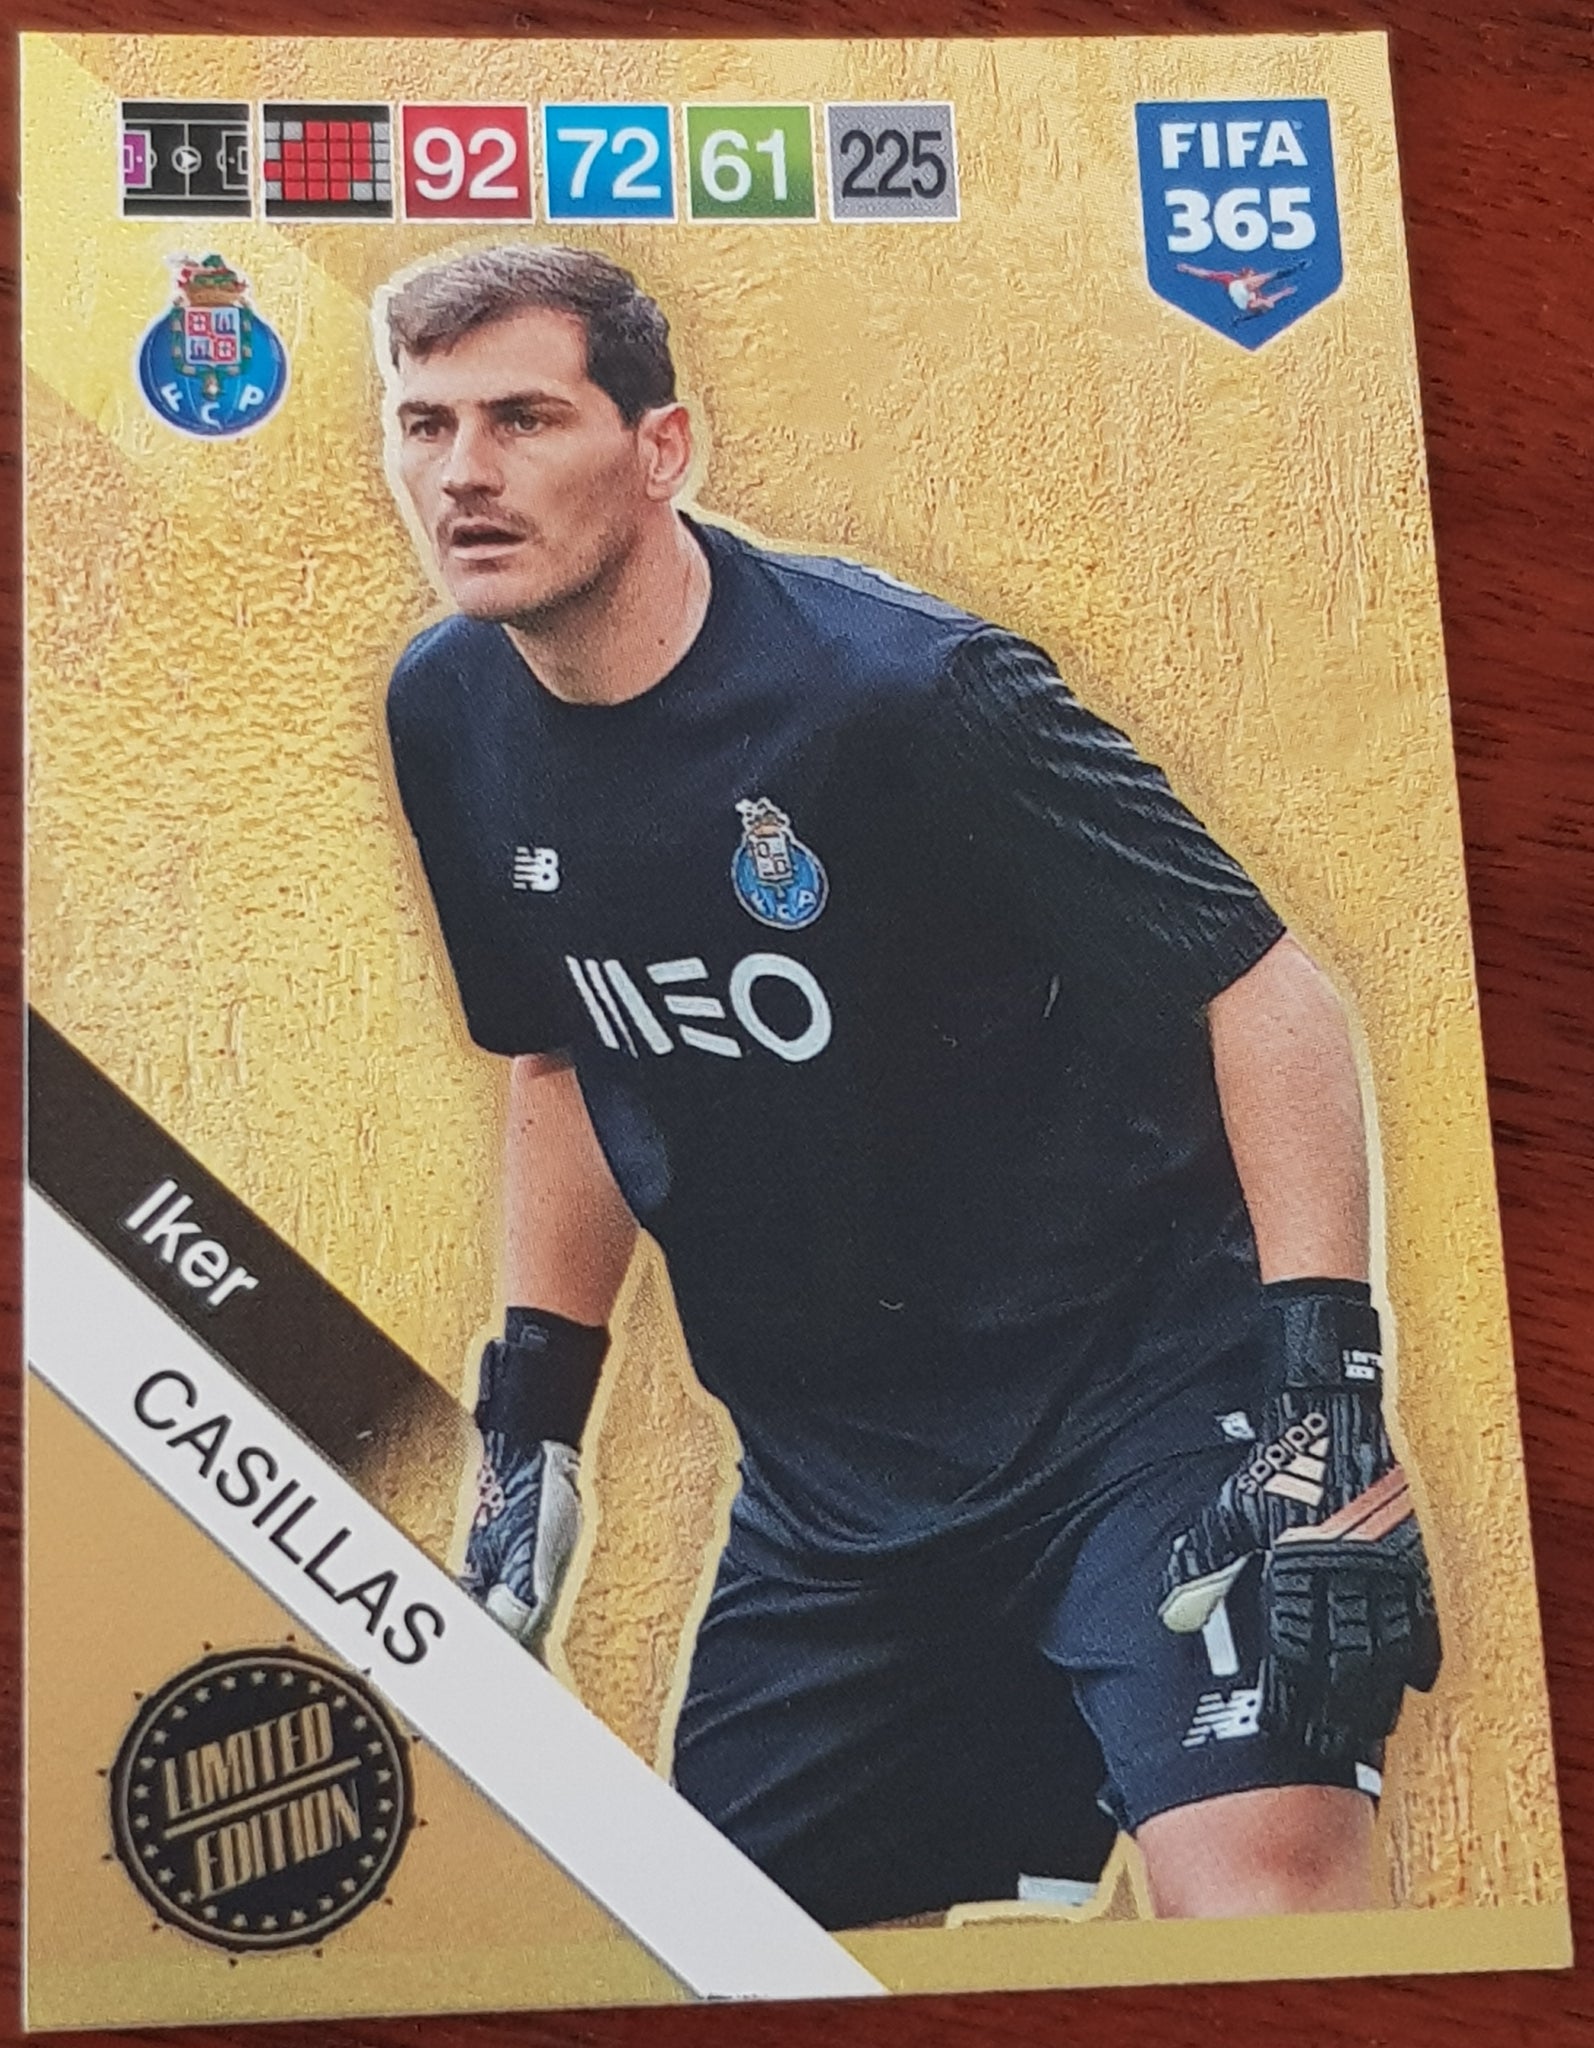 2018 Panini Adrenalyn FIFA 365 Iker Casillas Limited Edition Trading Card